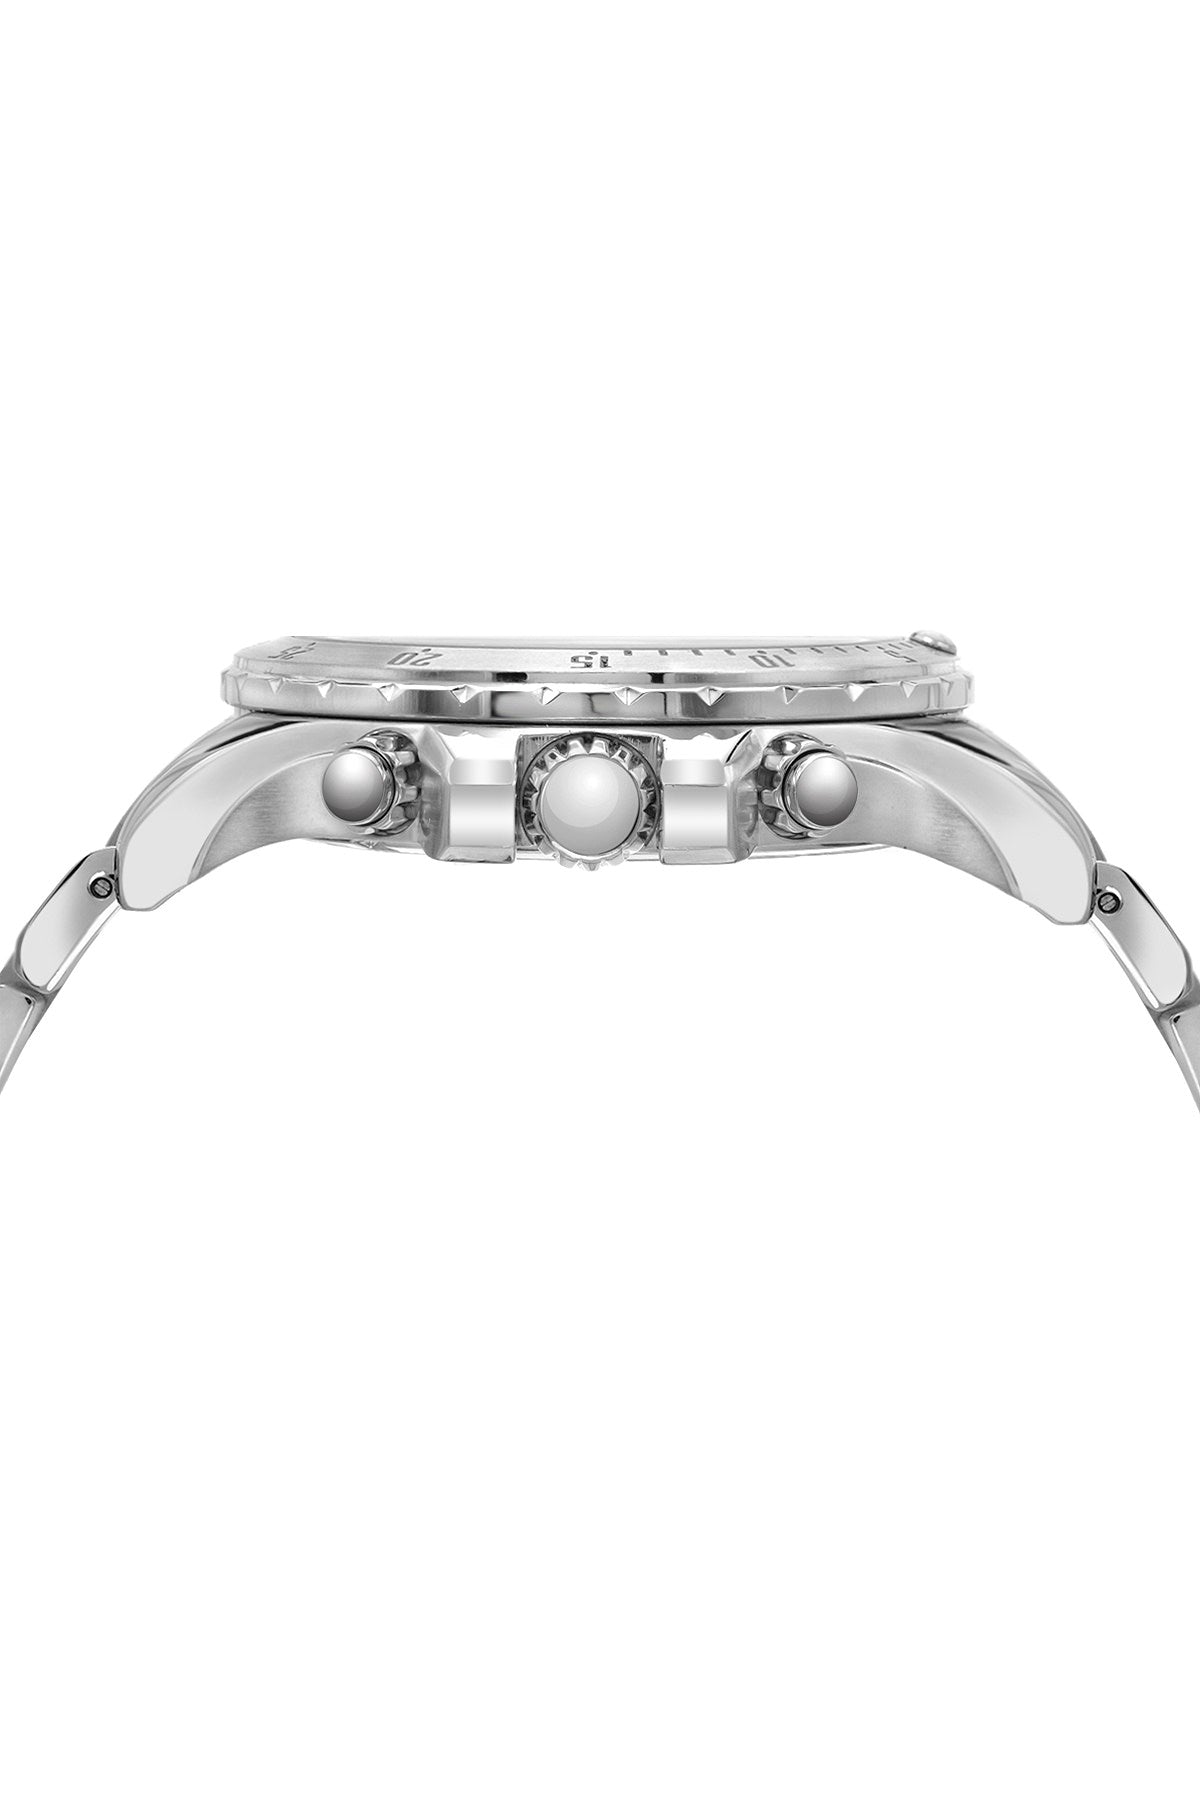 Porsamo Bleu Lorenzo luxury chronograph men's stainless steel watch, silver 561ALOS